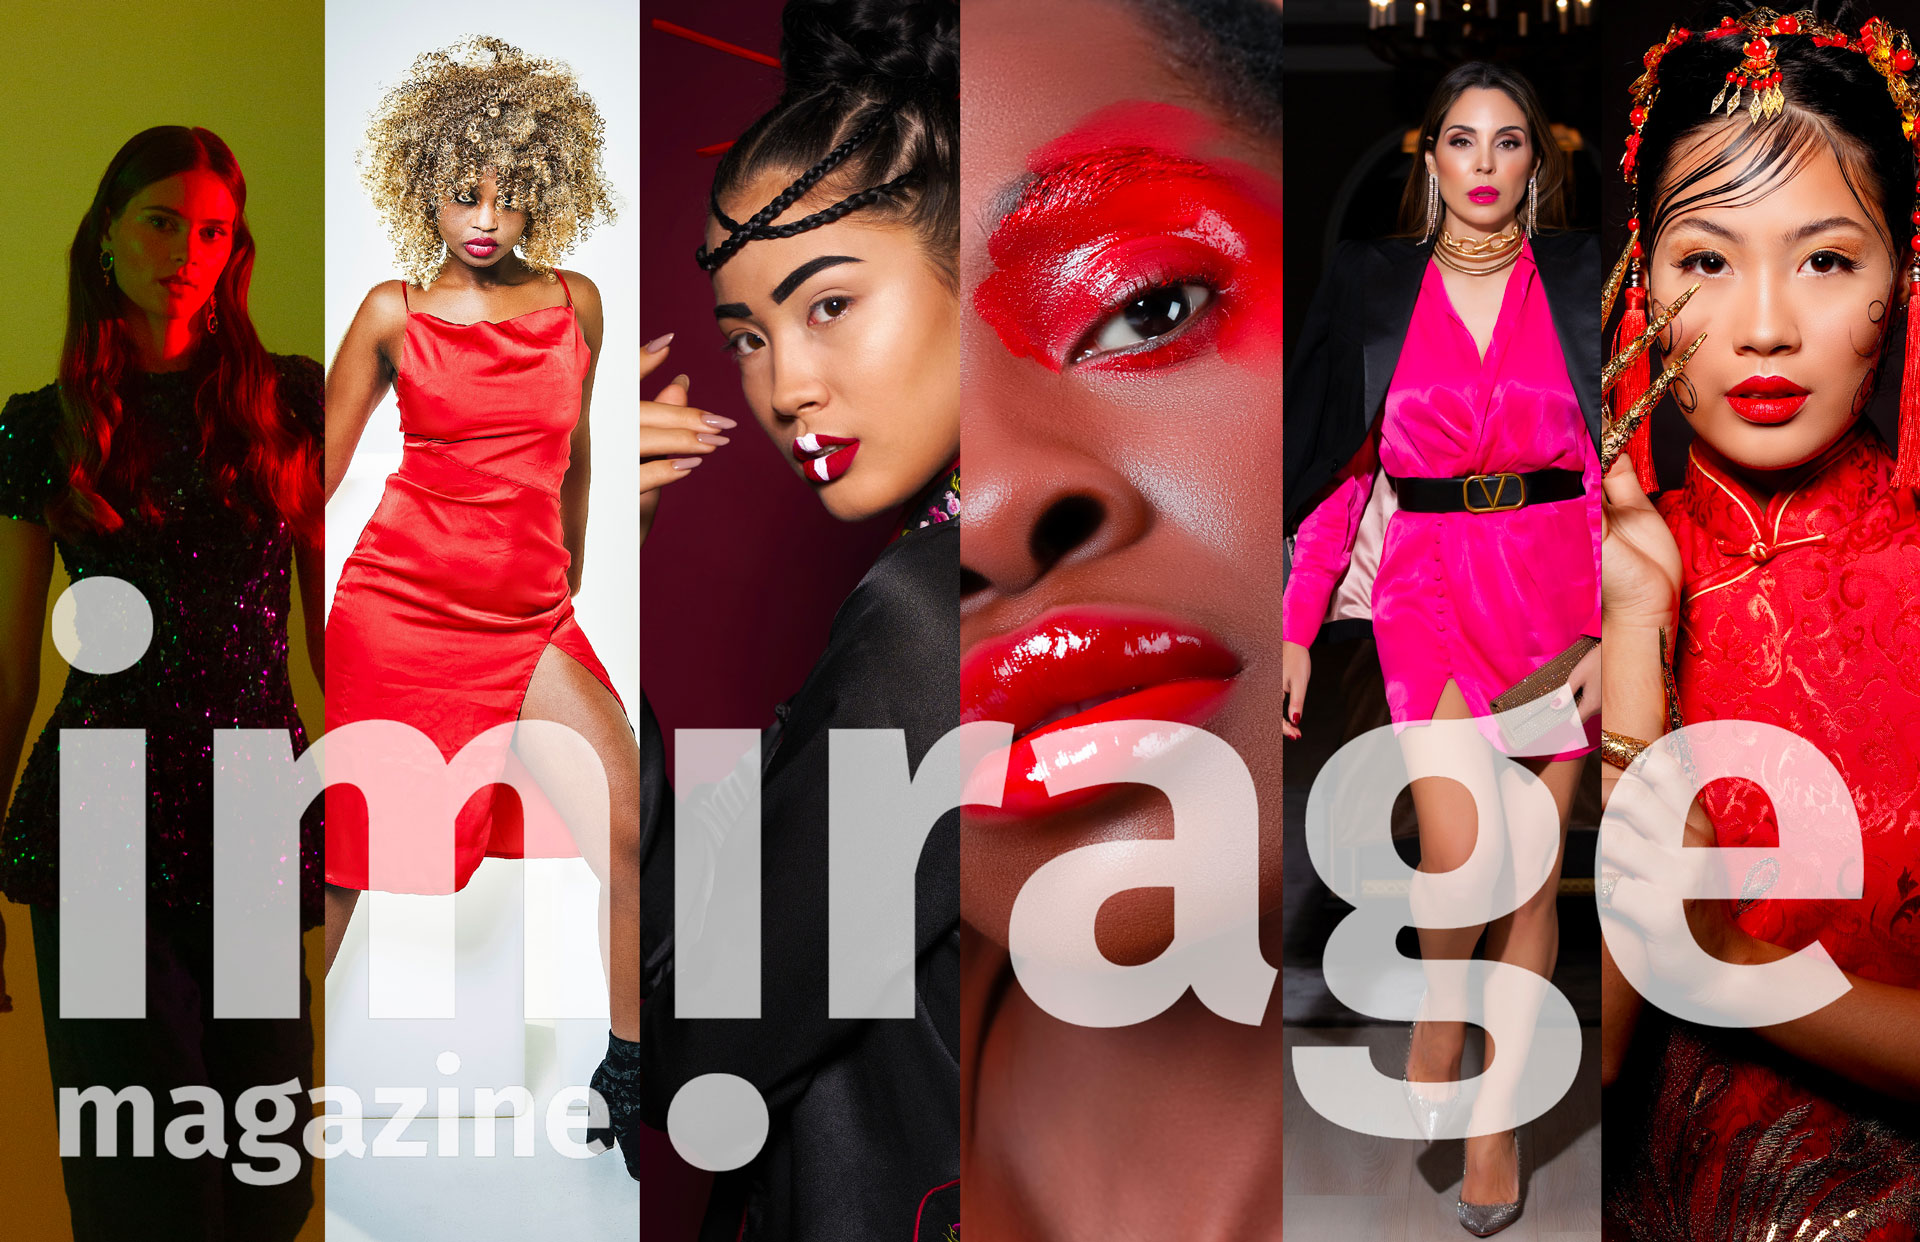 Imirage Magazine Progressive